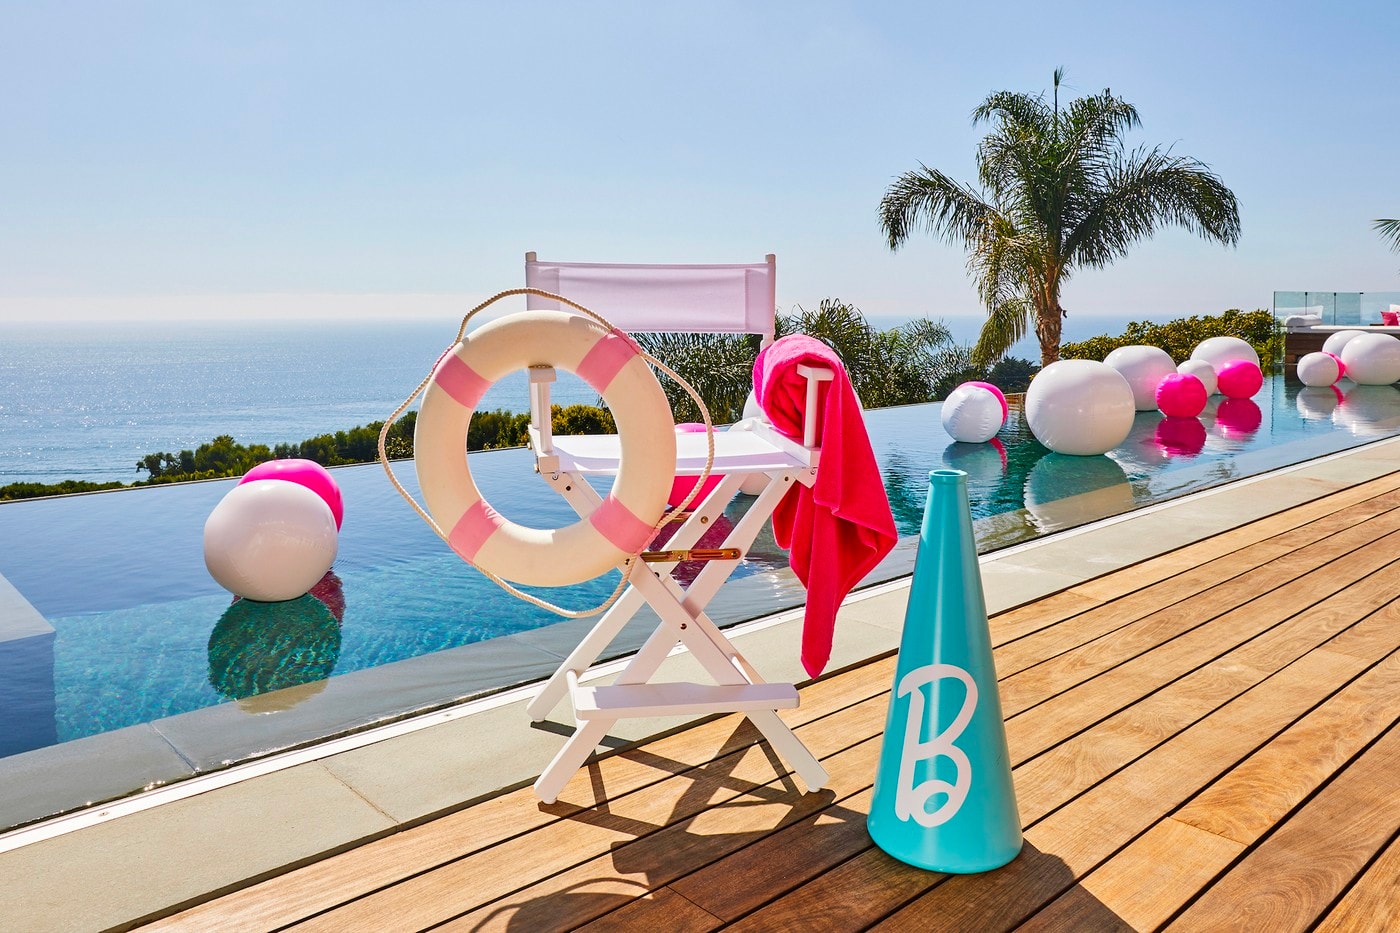 Airbnb Barbie Malibu Dreamhouse News homes rentals travel Malibu toys dolls luxury homes pools summer party getaways 